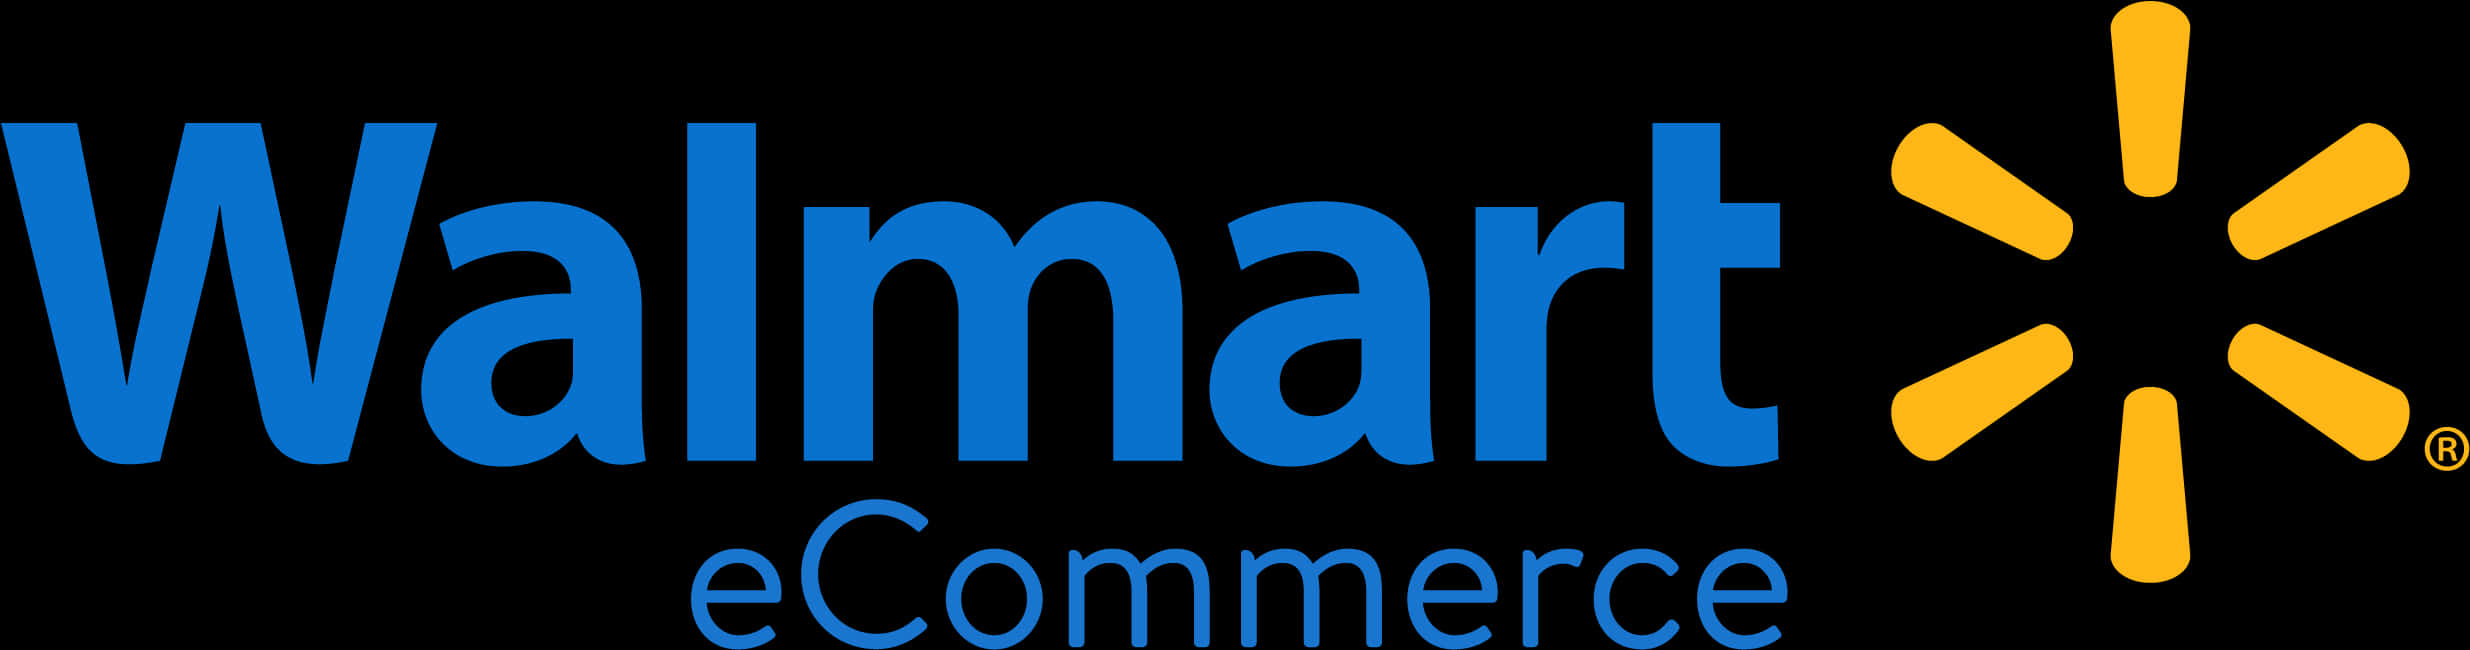 Walmarte Commerce Logo PNG image